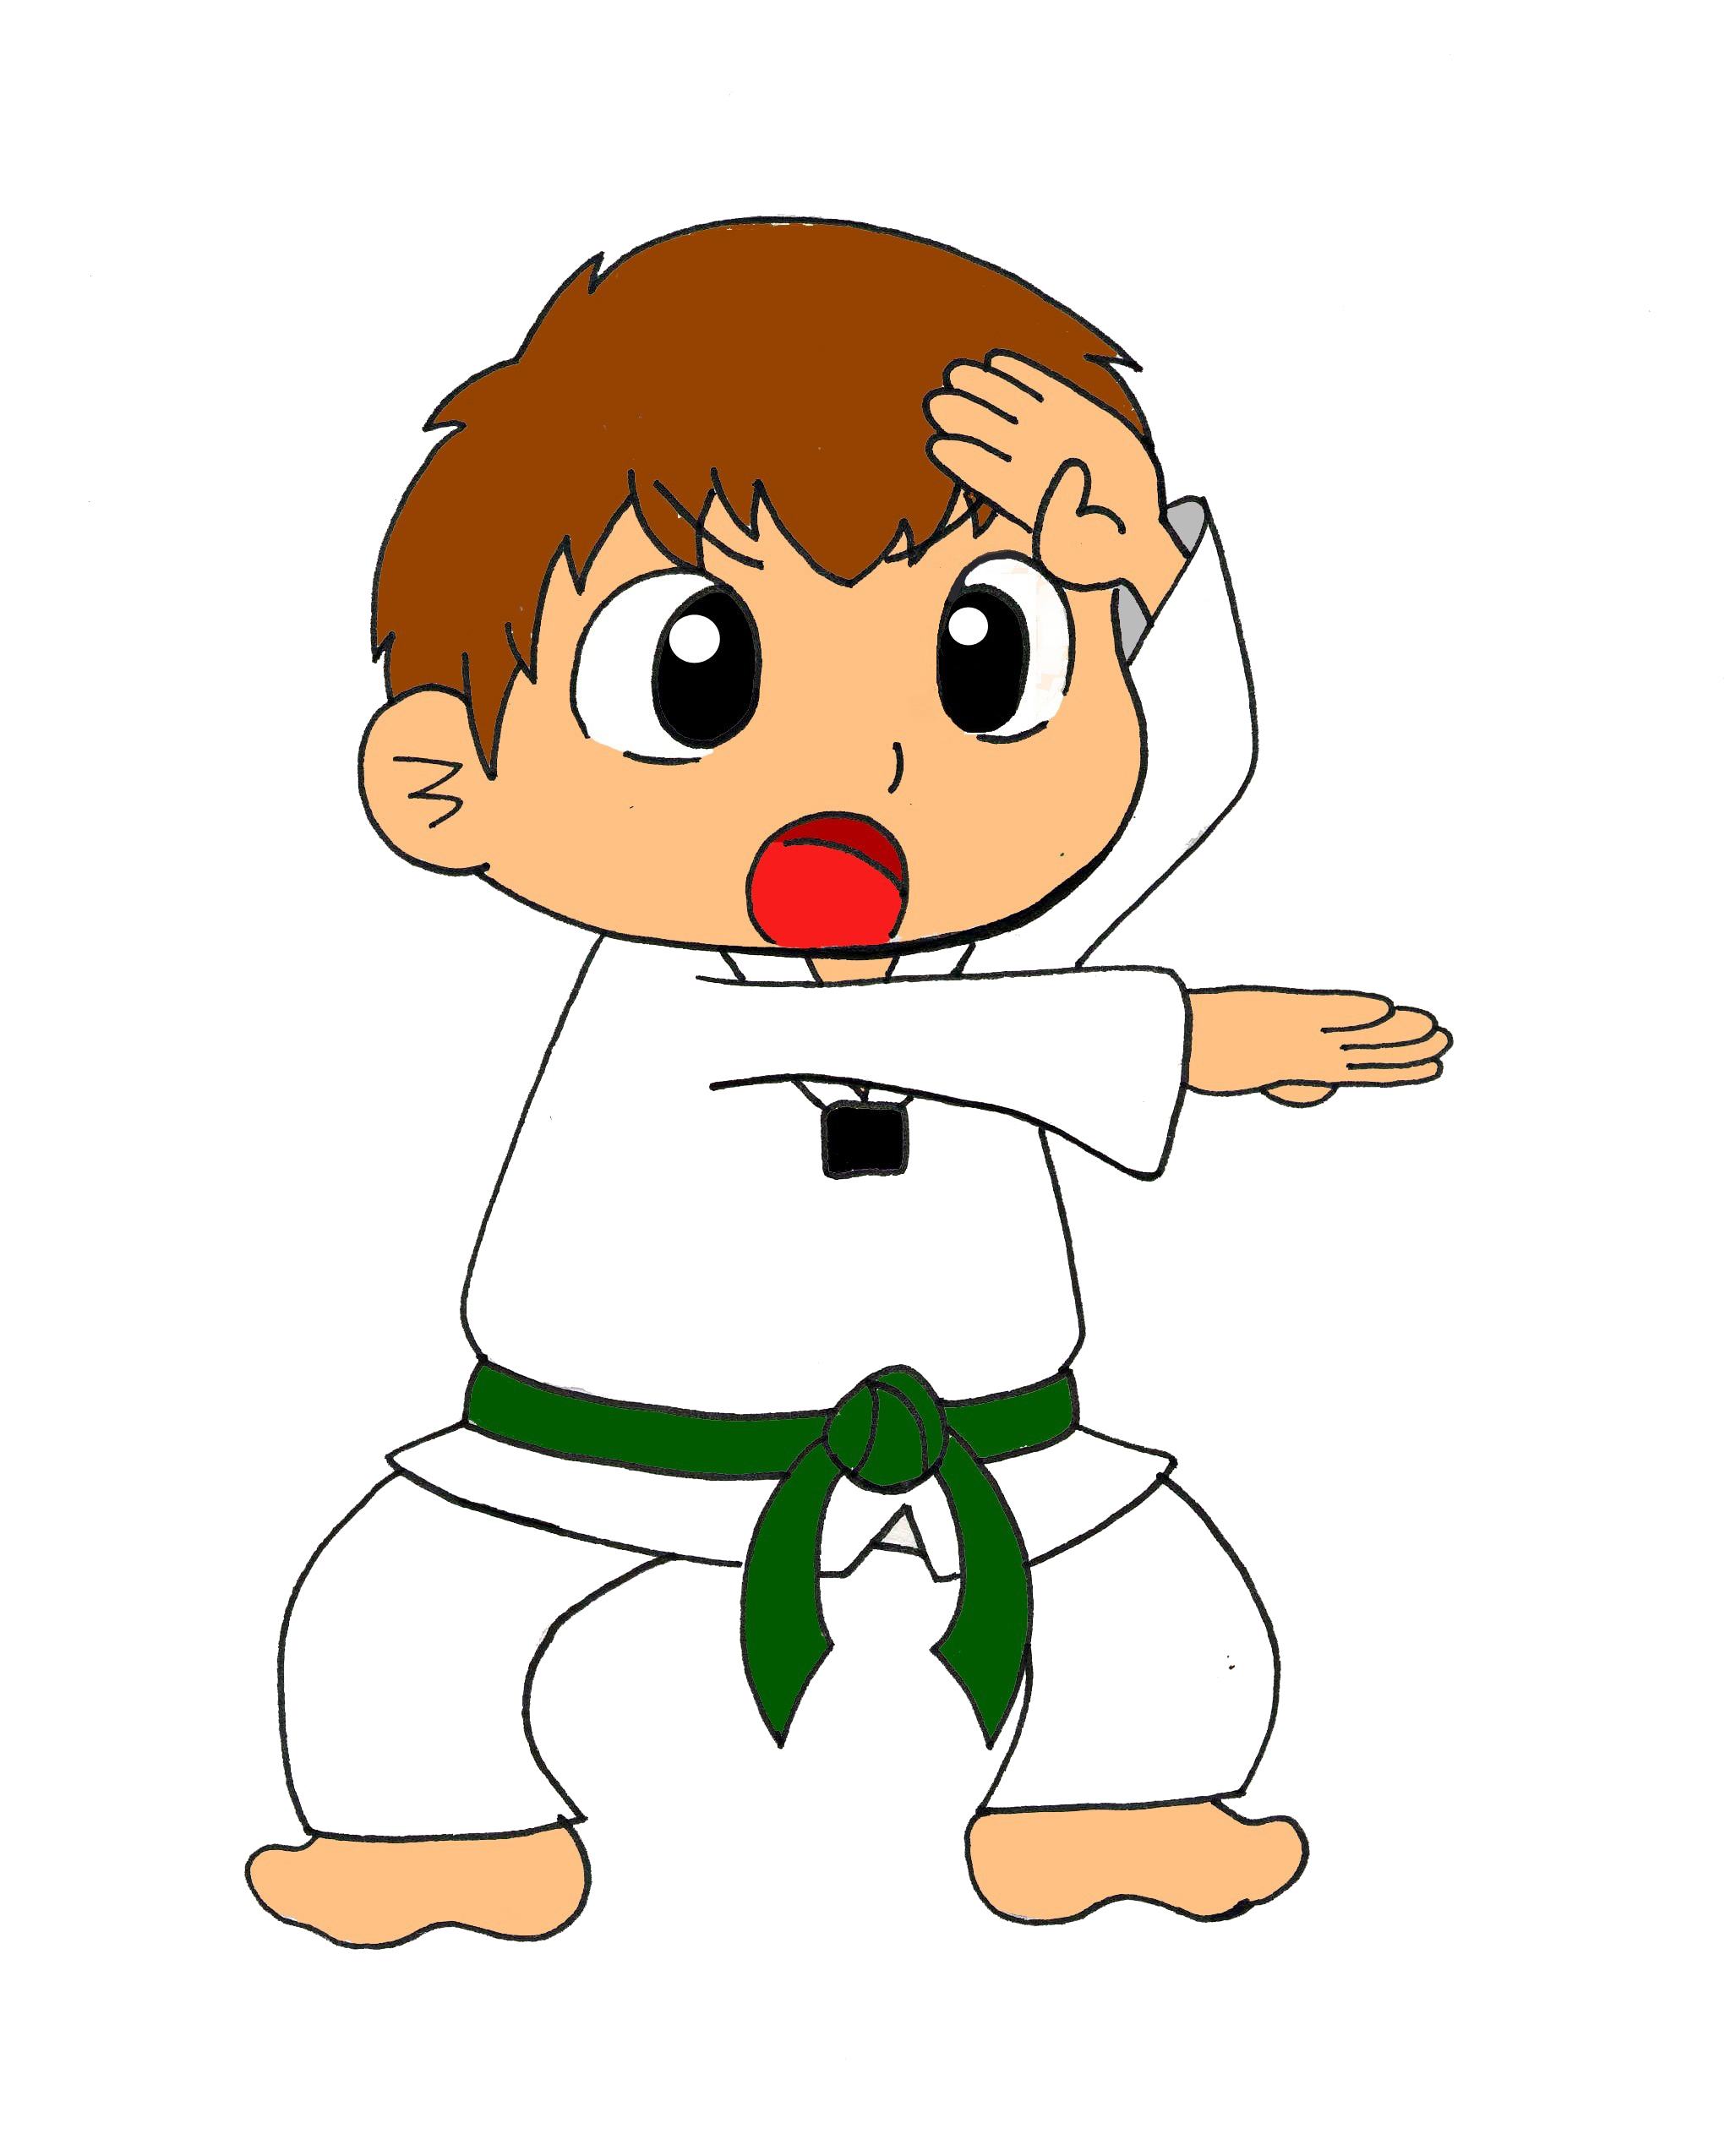 taekwondo clip art free - Goo